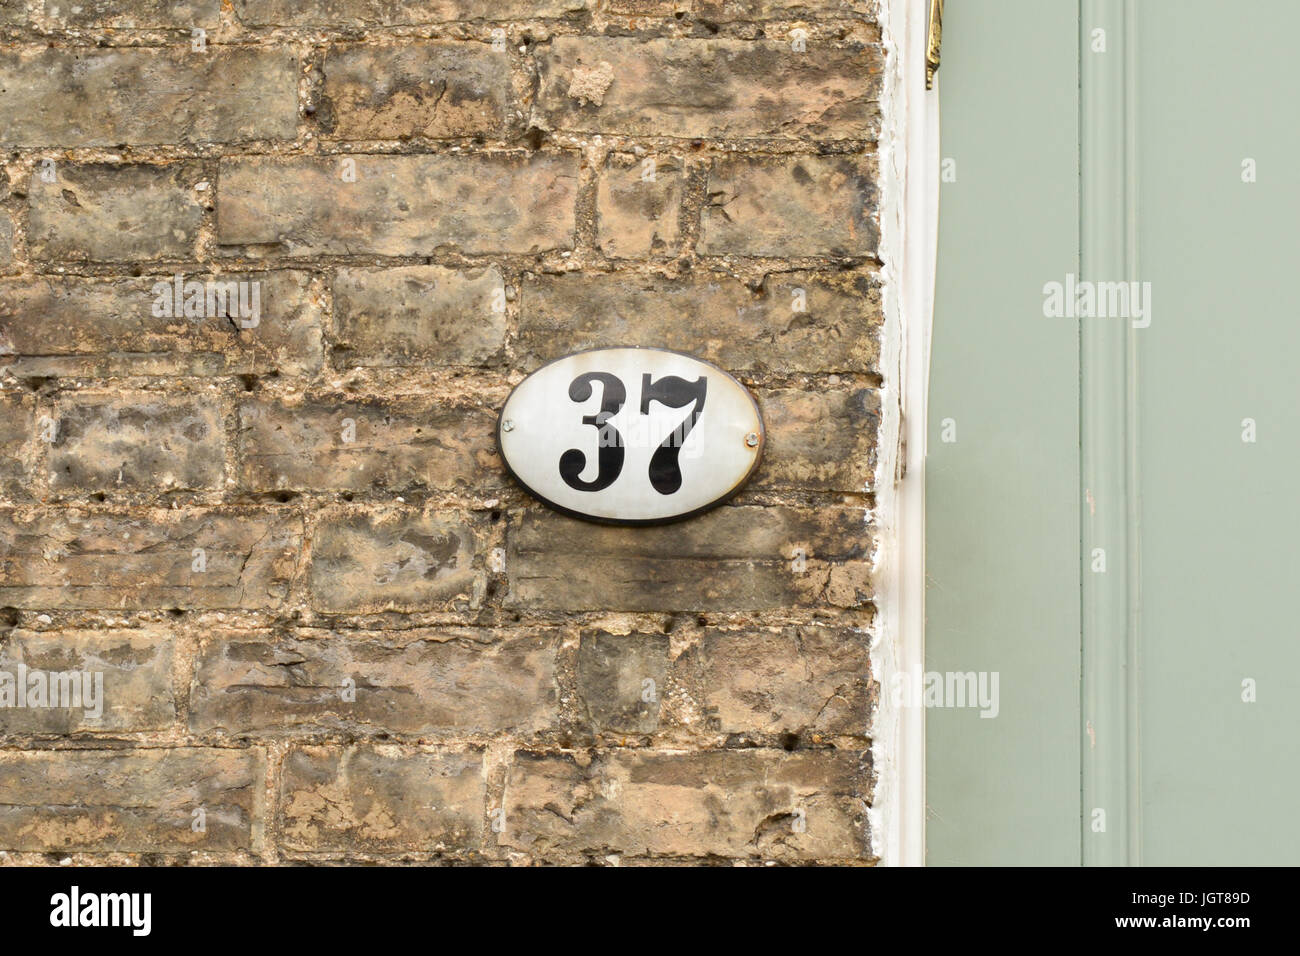 House Number 37 Plaque Home Number Door Address Sign No 37 